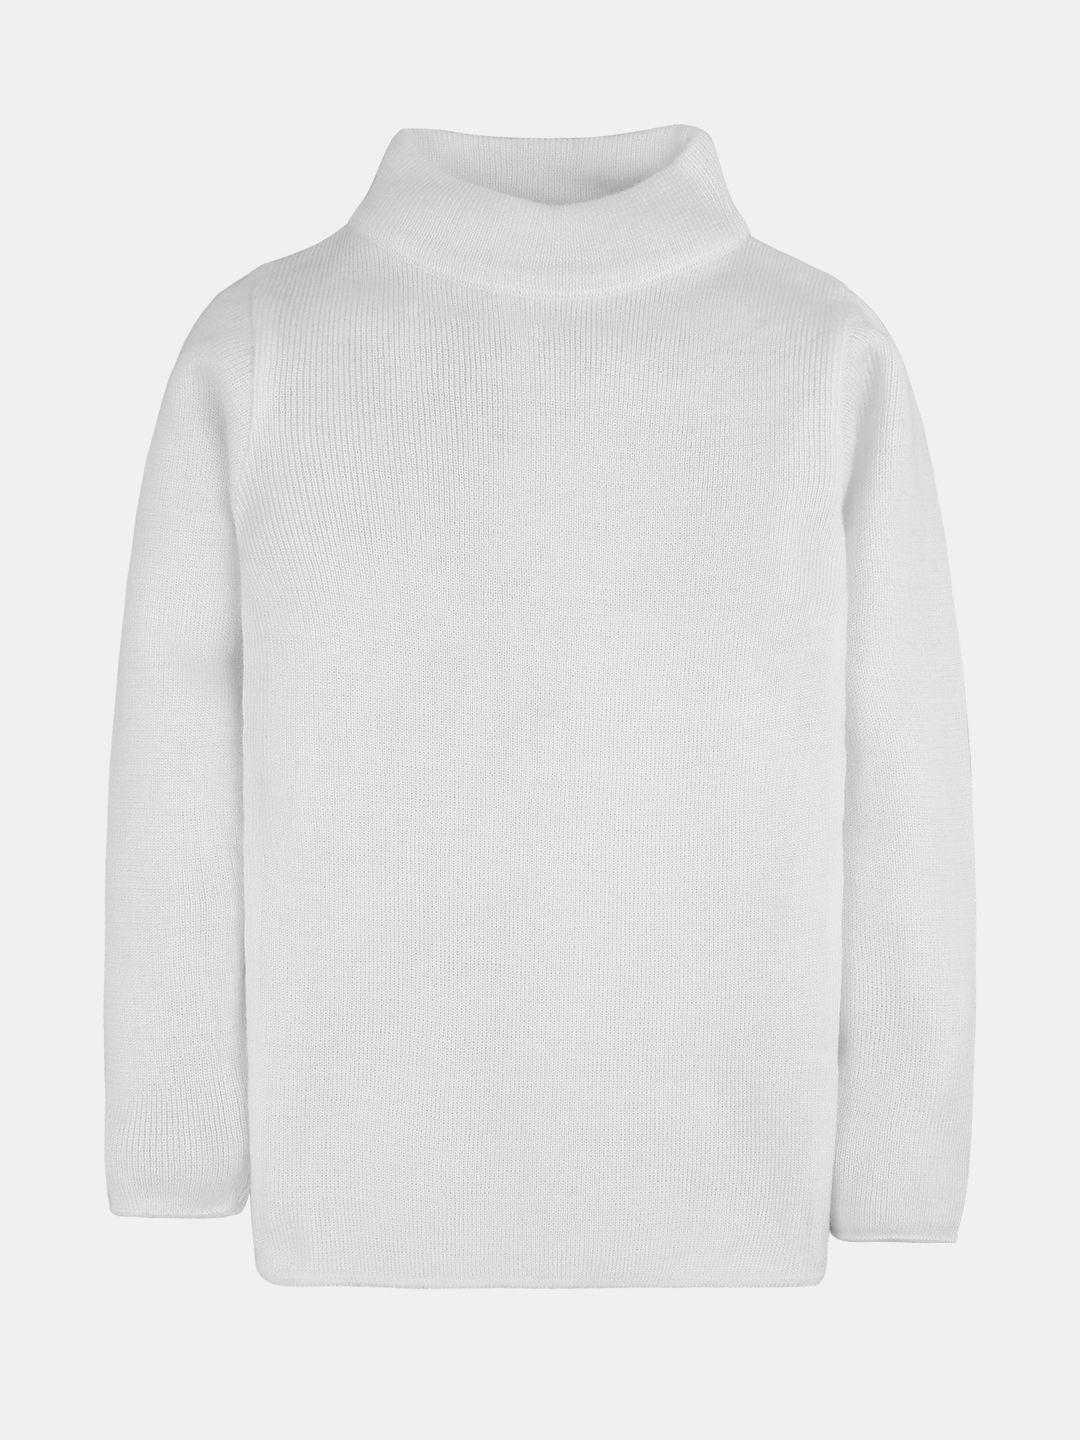 rvk unisex white solid sweater